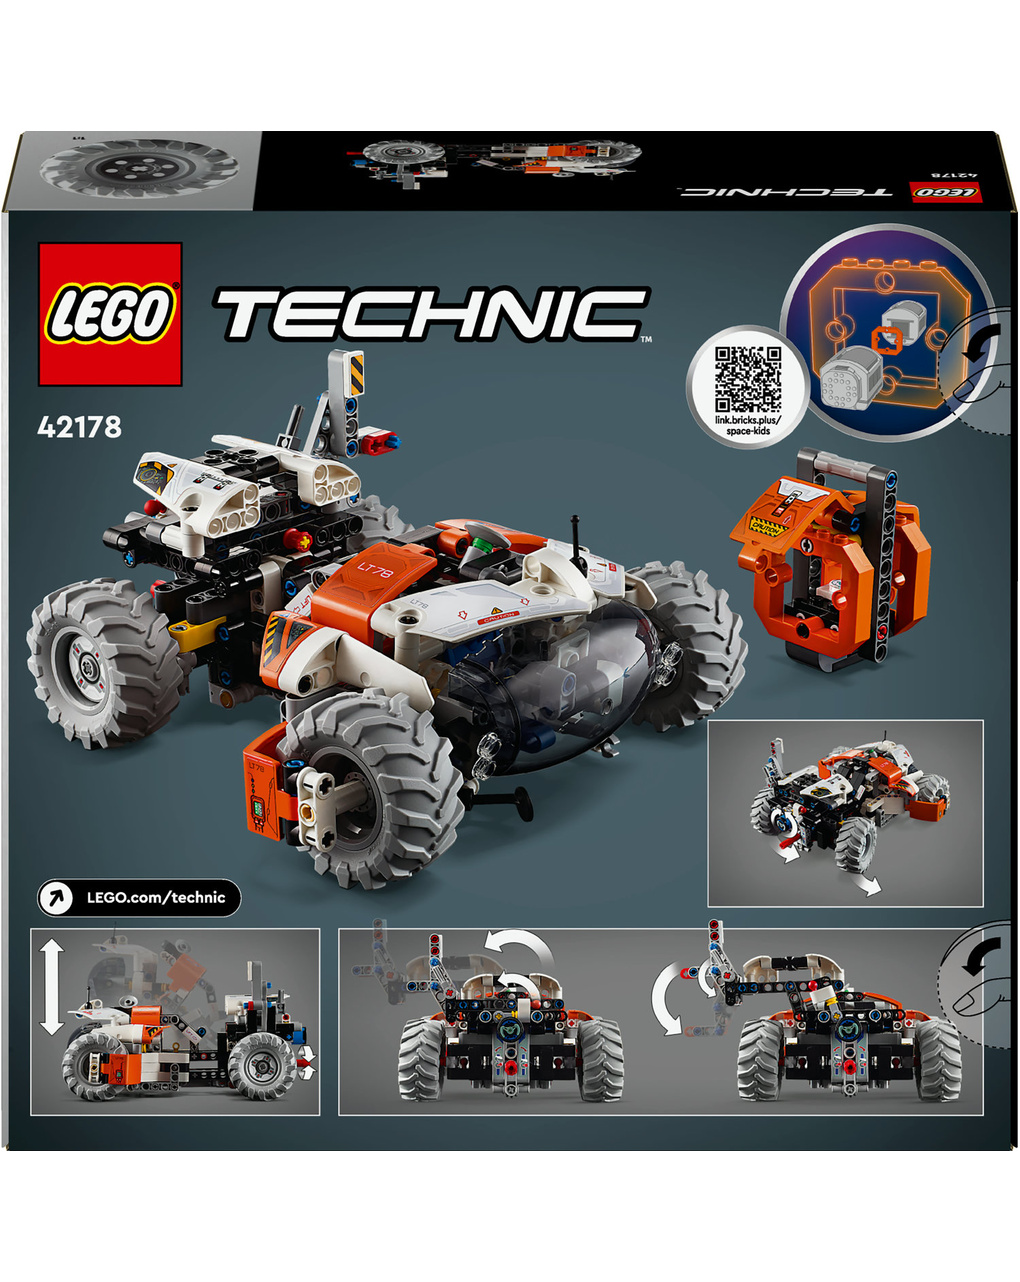 Lt78 cargador espacial - 42178 - lego technic - LEGO